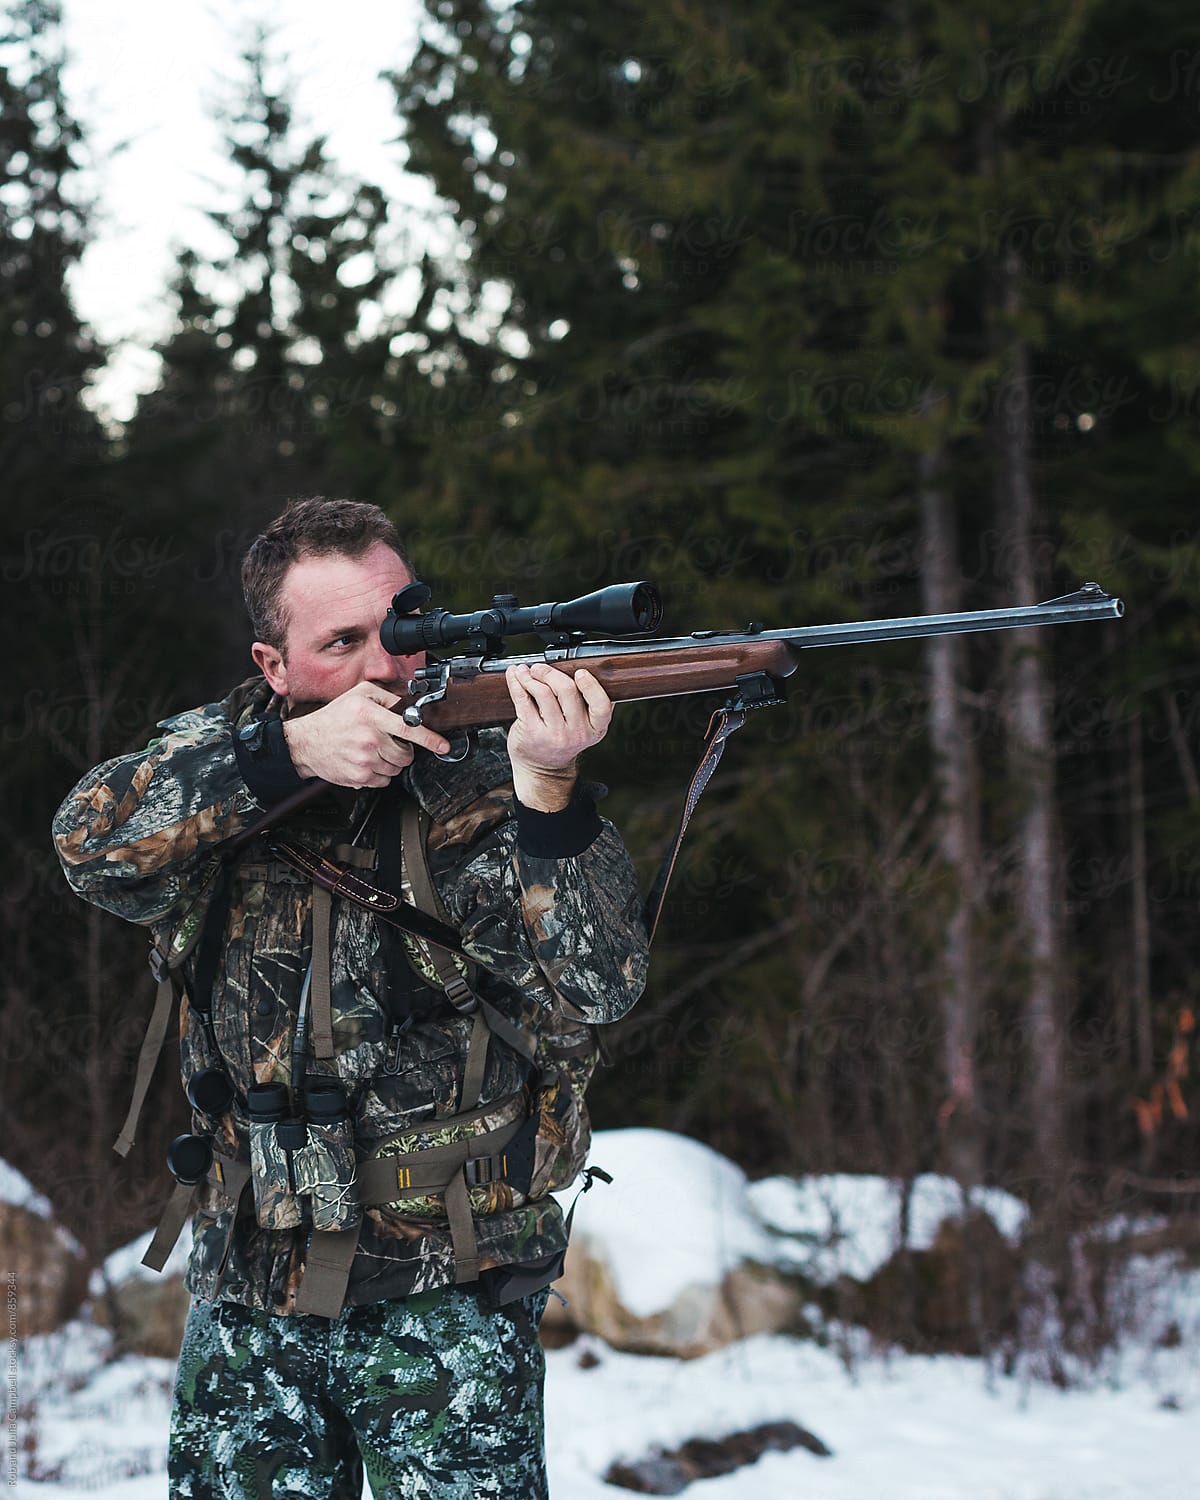 Hunter taking aim with rifle